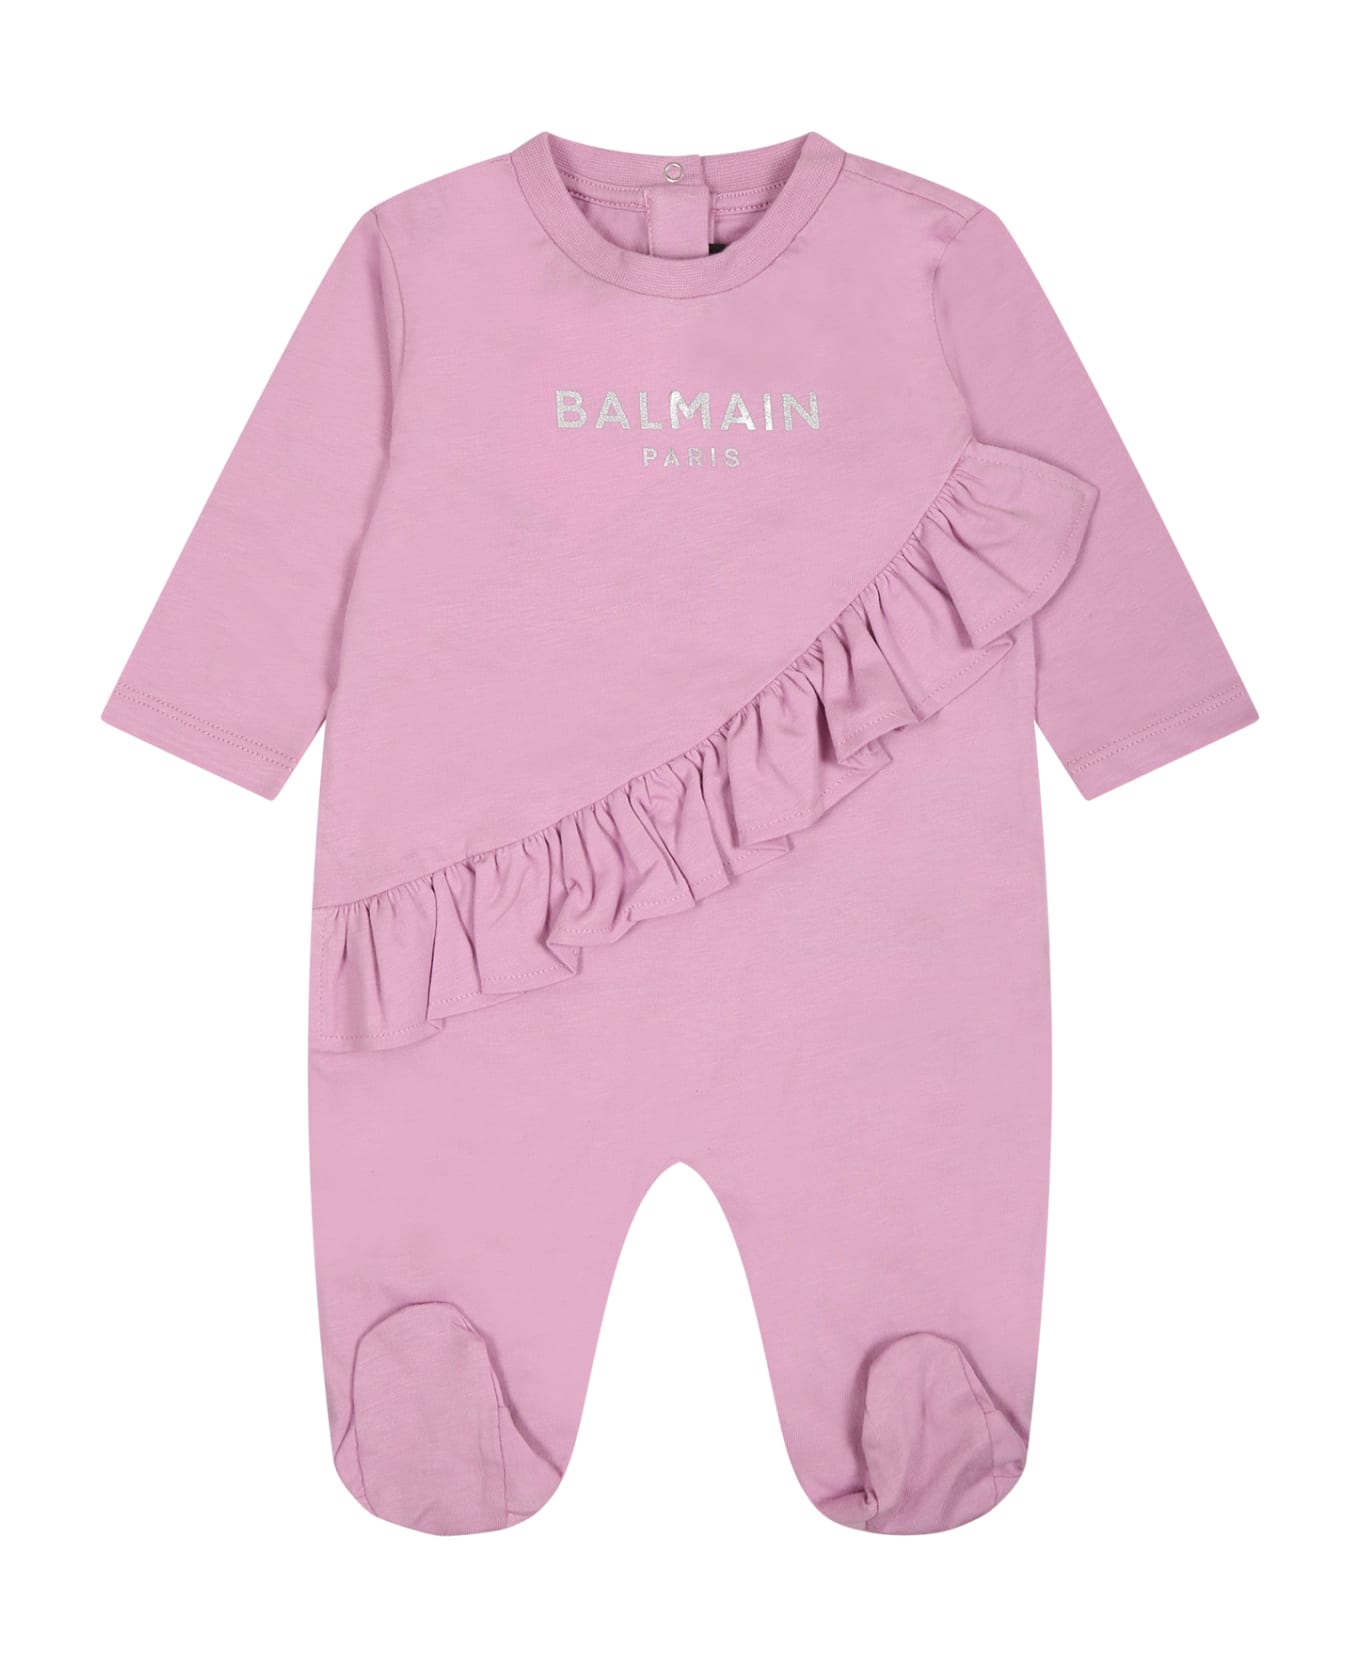 Balmain Purple Set For Baby Girl With Logo - Viola